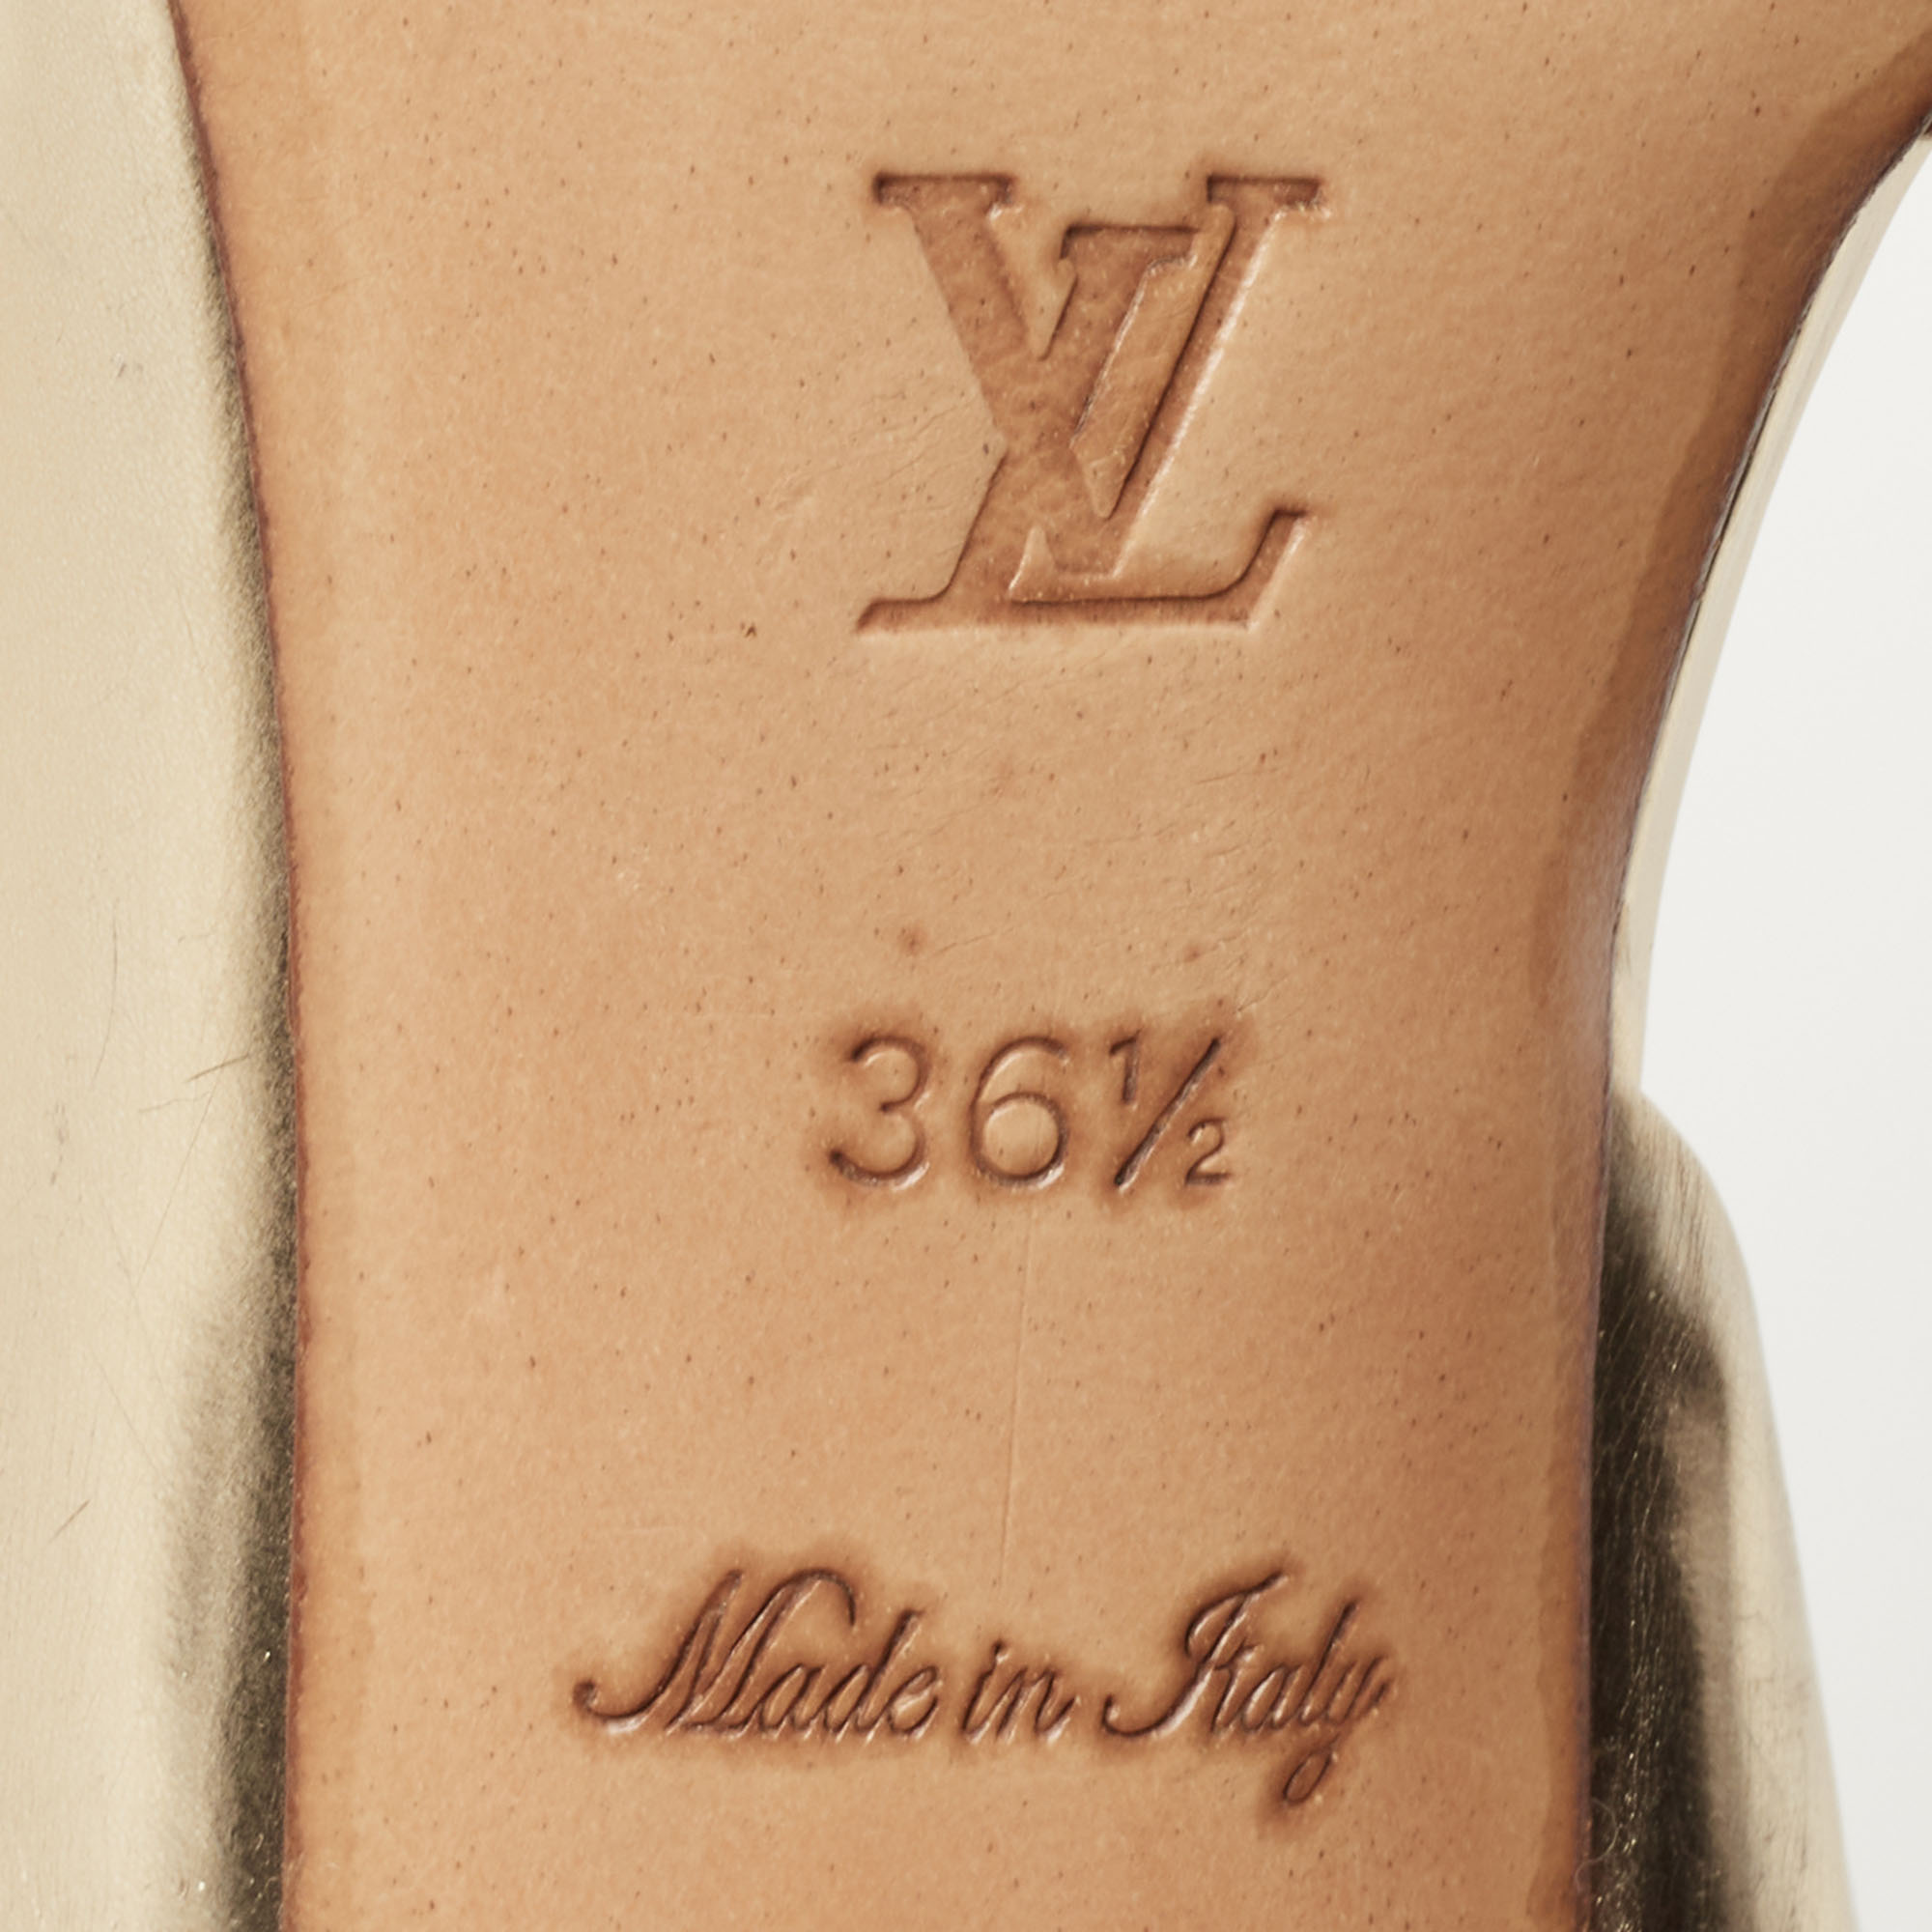 Louis Vuitton Gold Leather Slingback Sandals Size 36.5